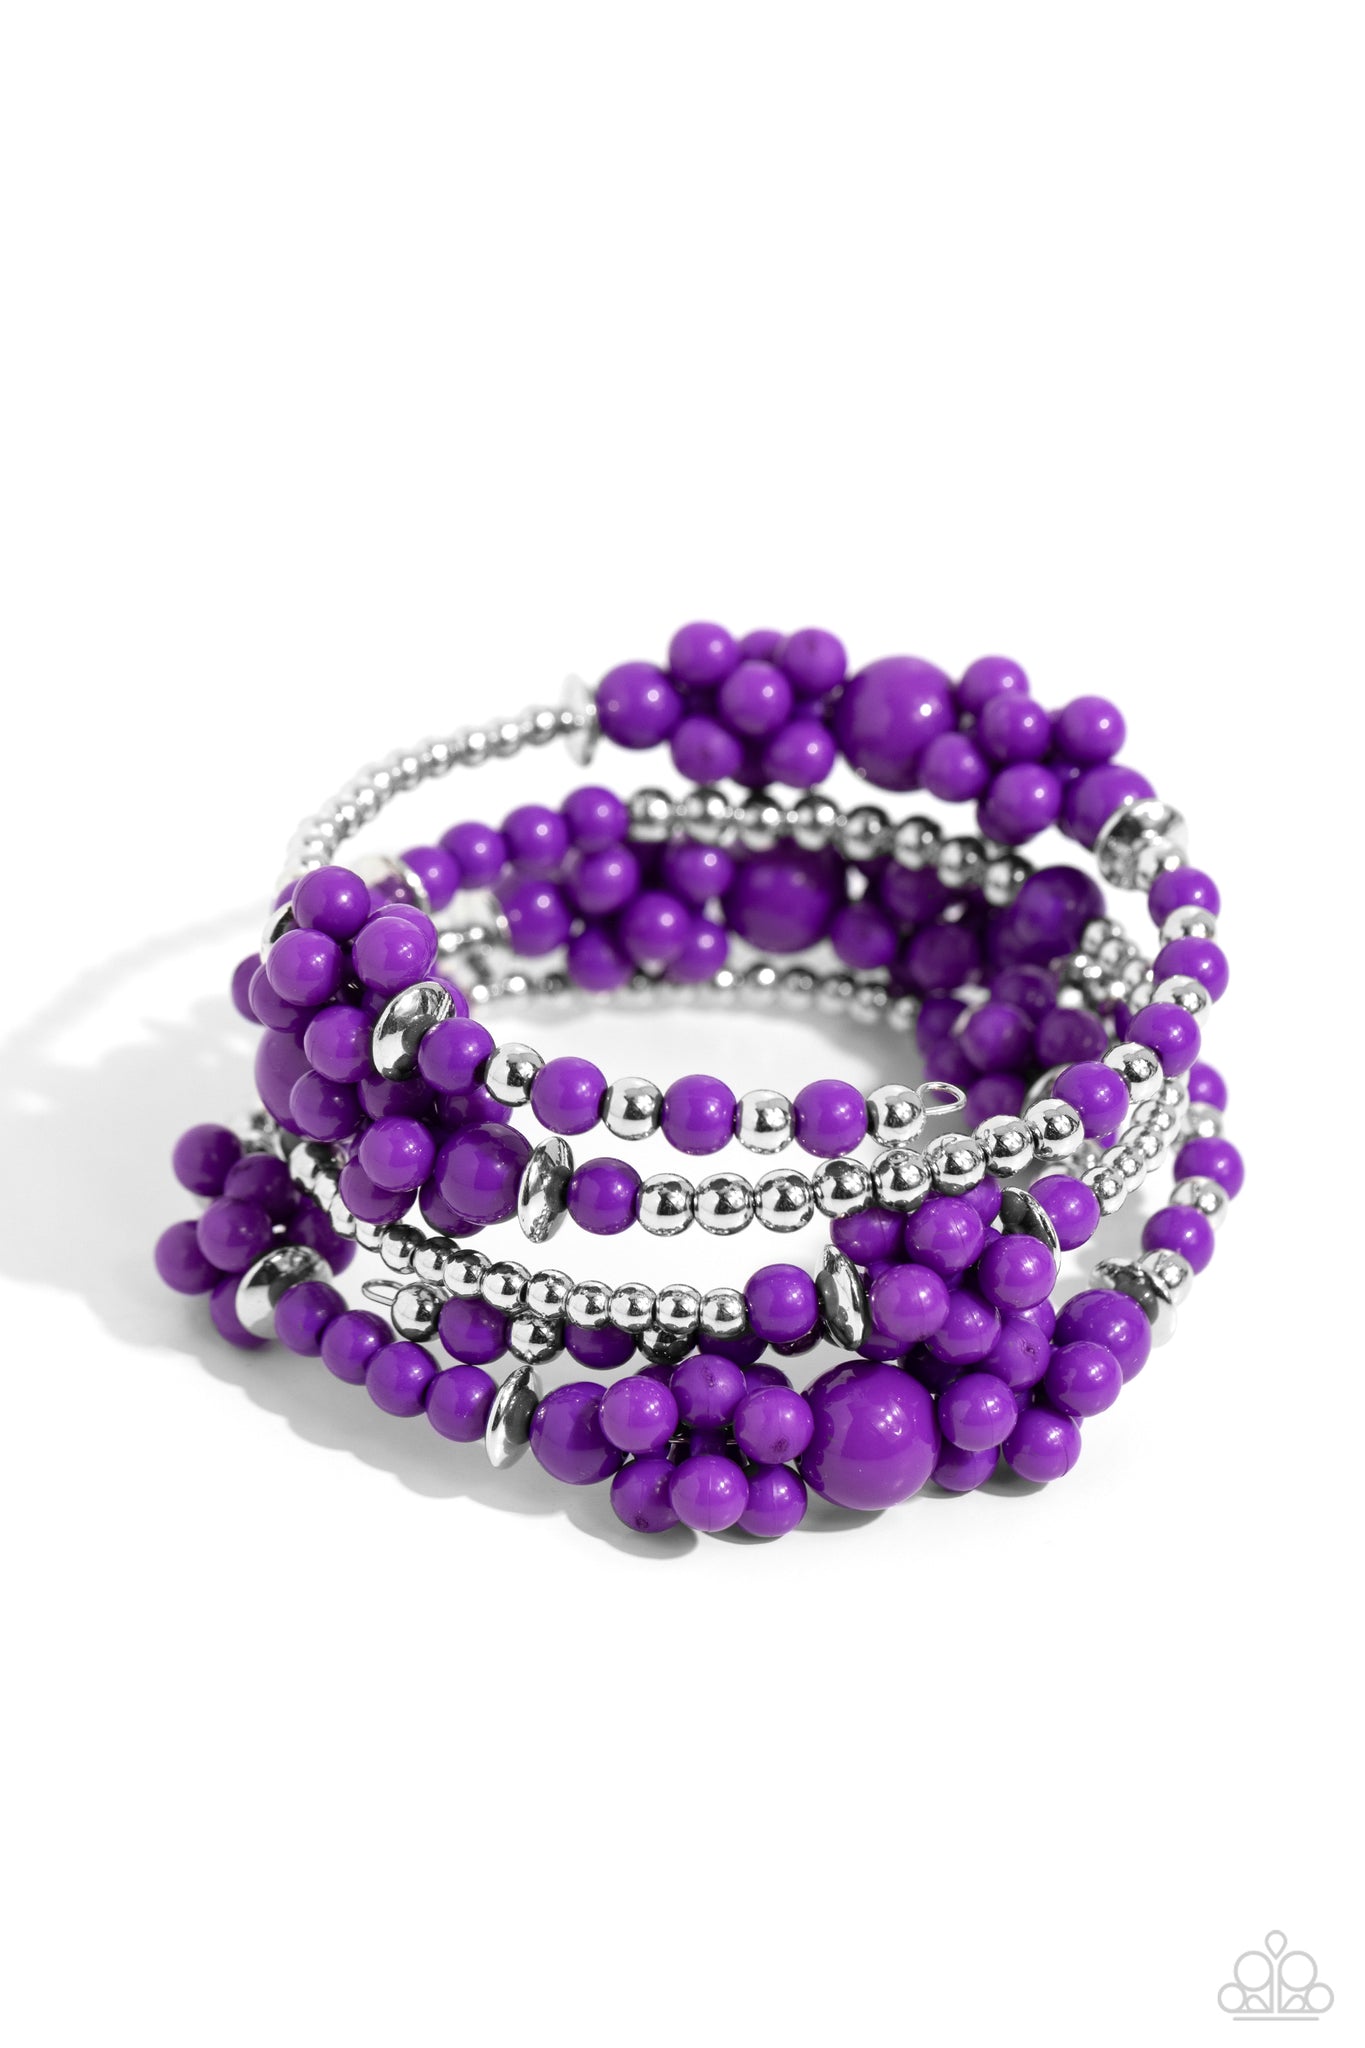 Compelling Clouds Bracelet (Purple, White)